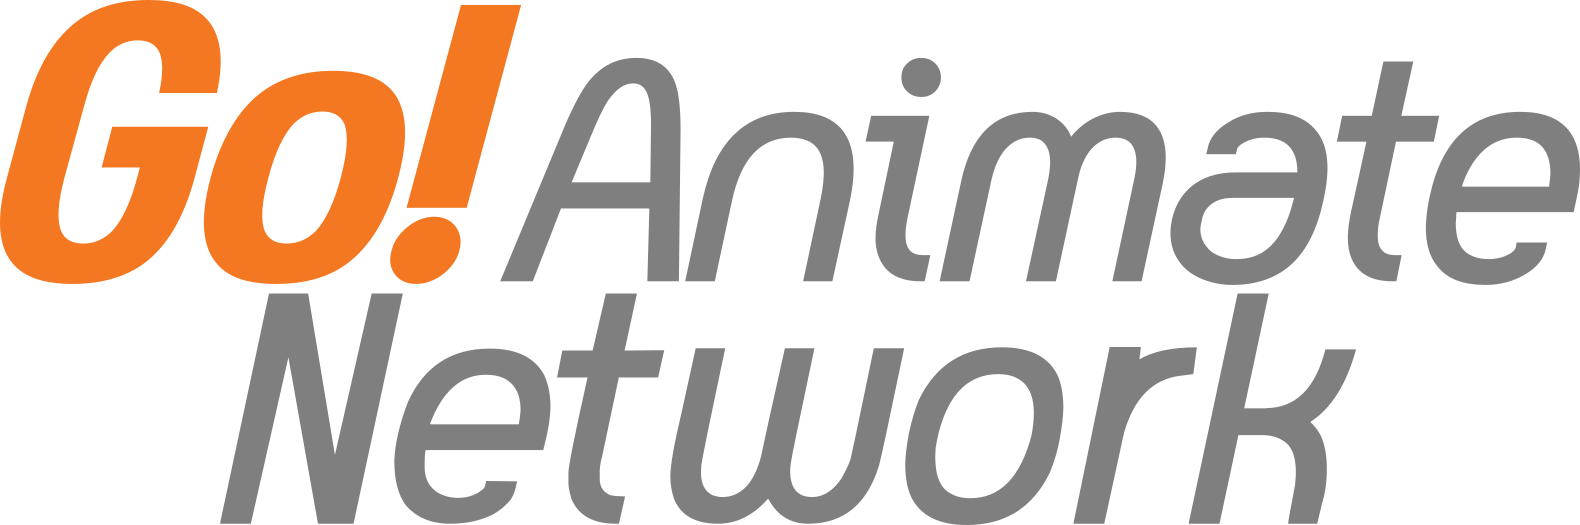 GoAnimate Logo - Image - Go!Animate Network logo.png | Dream Logos Wiki | FANDOM ...